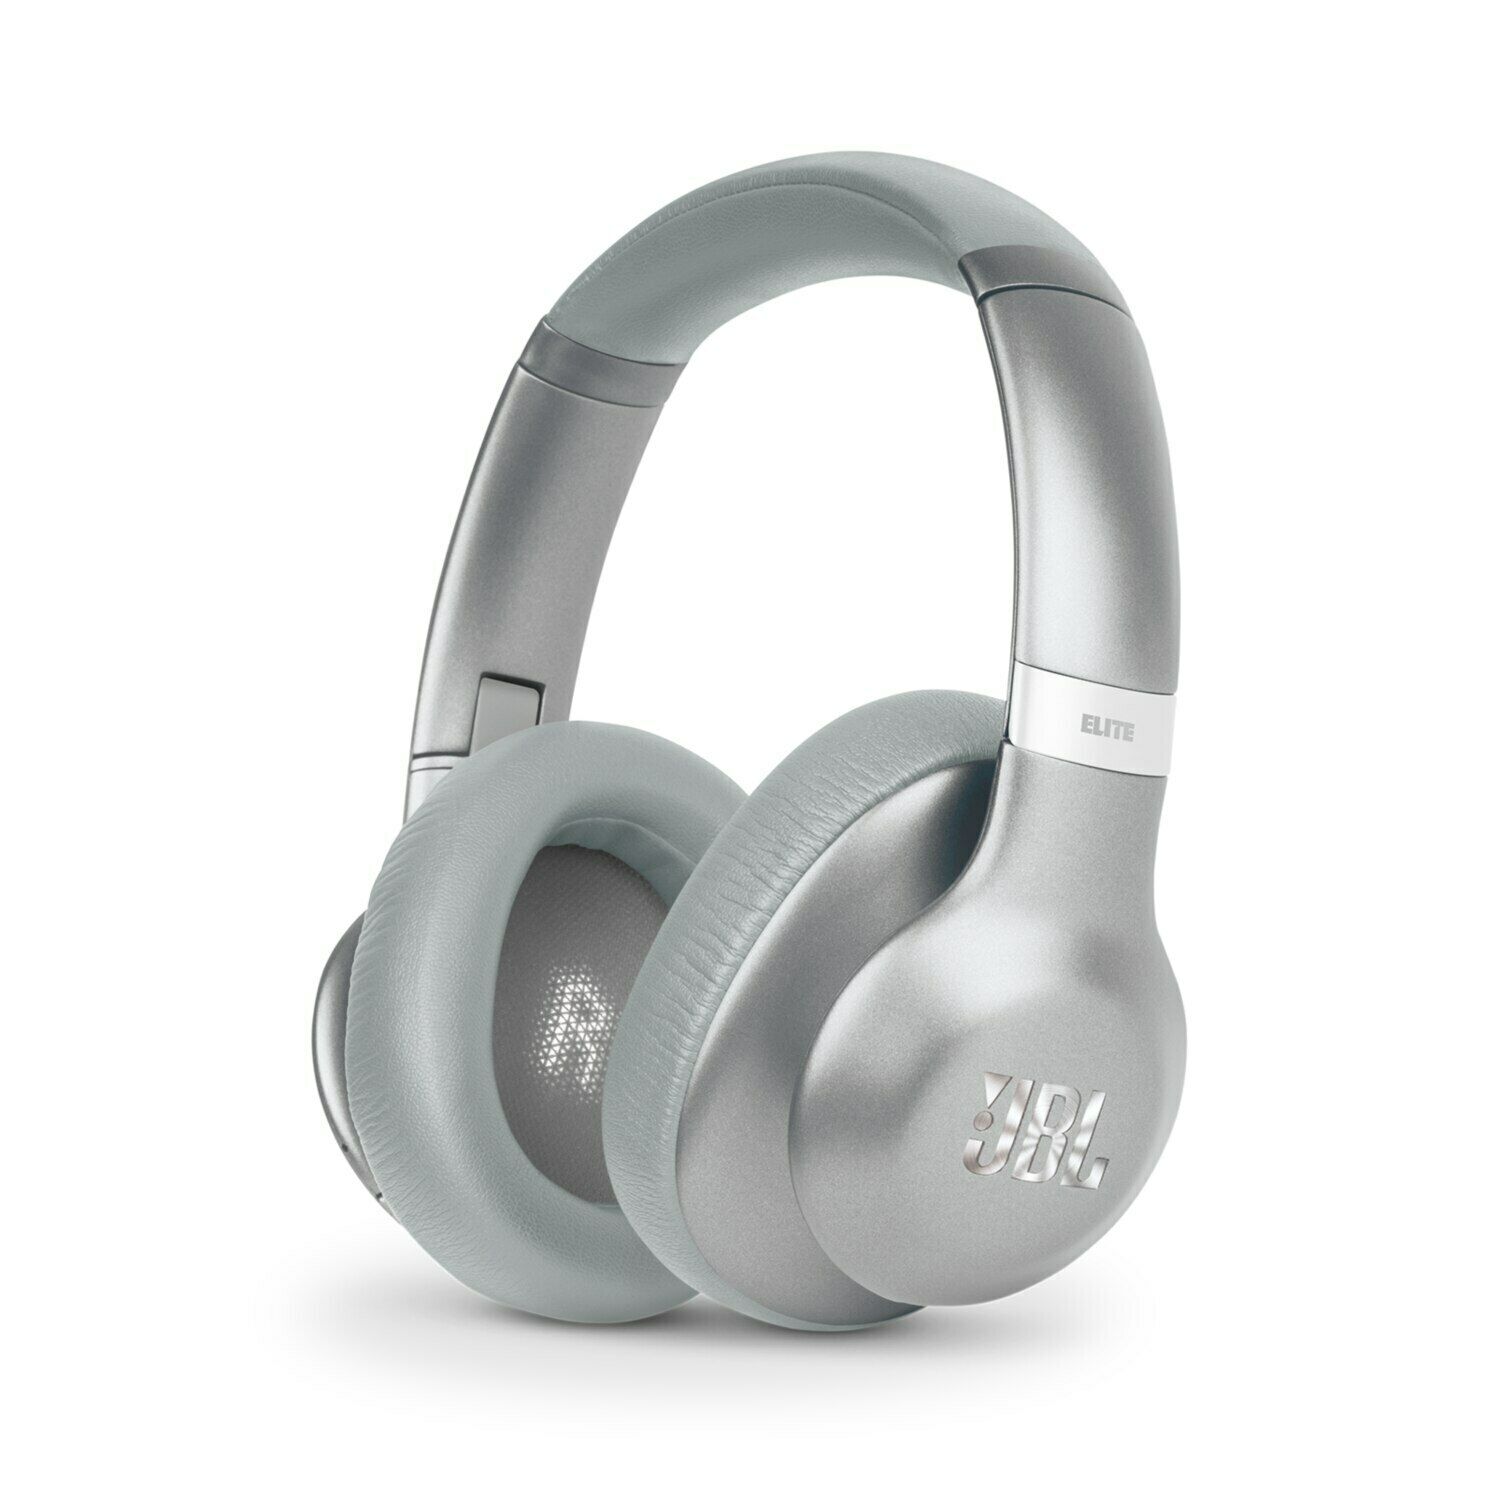 Bild zu Over-Ear Bluetooth Kopfhörer JBL Everest Elite 750NC für 99,90€ (Vergleich: 149,99€)